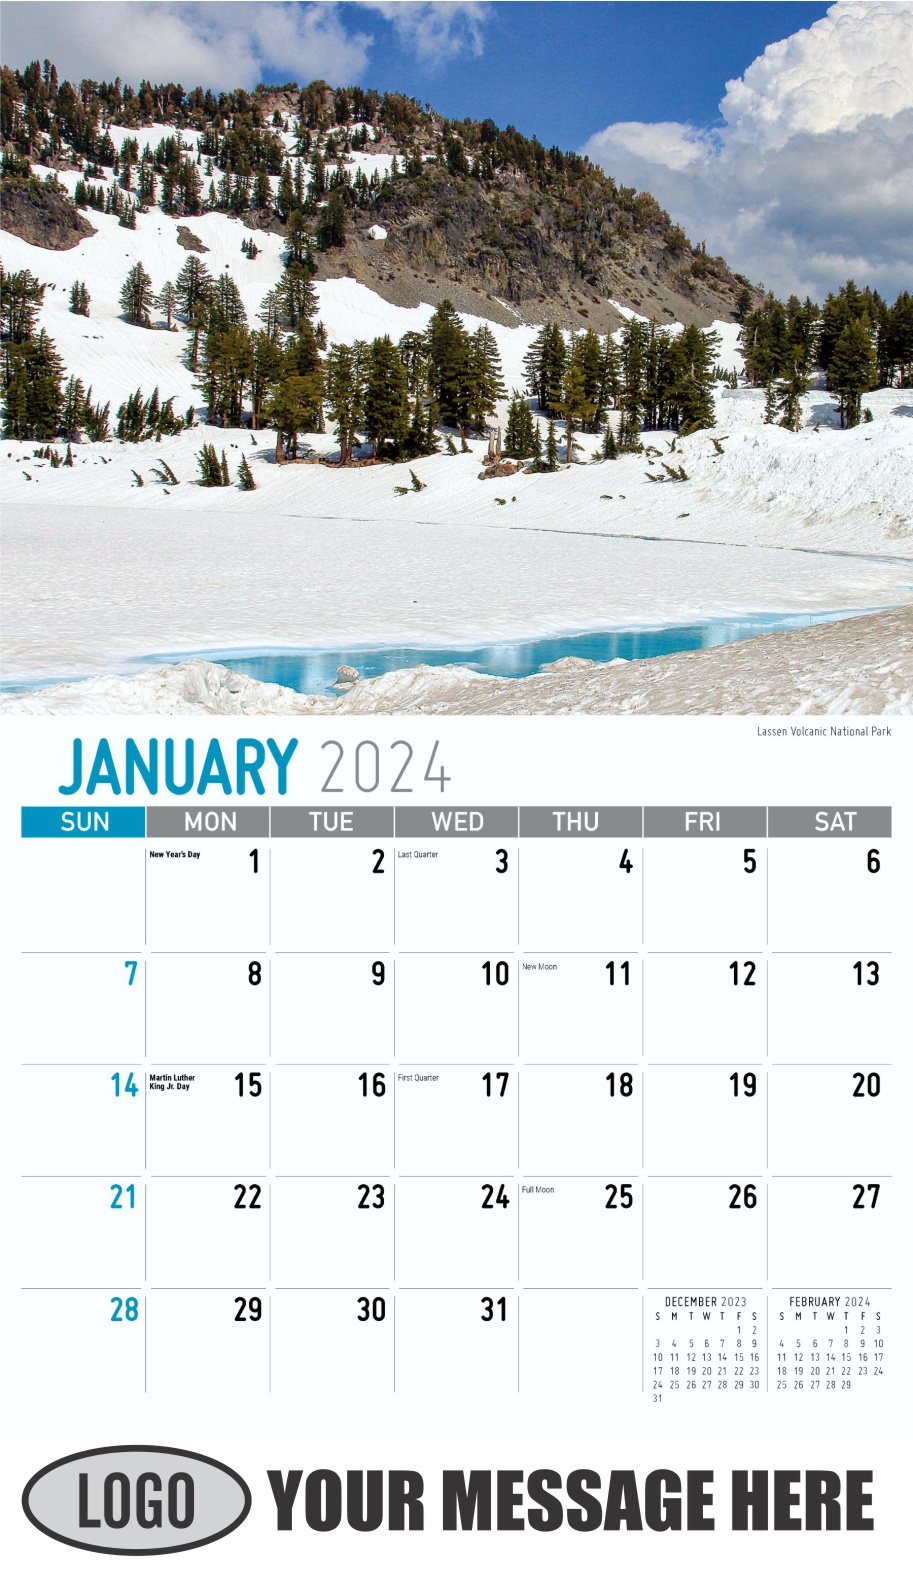 Scenes of California 2024 Business Advertising Wall Calendar - January